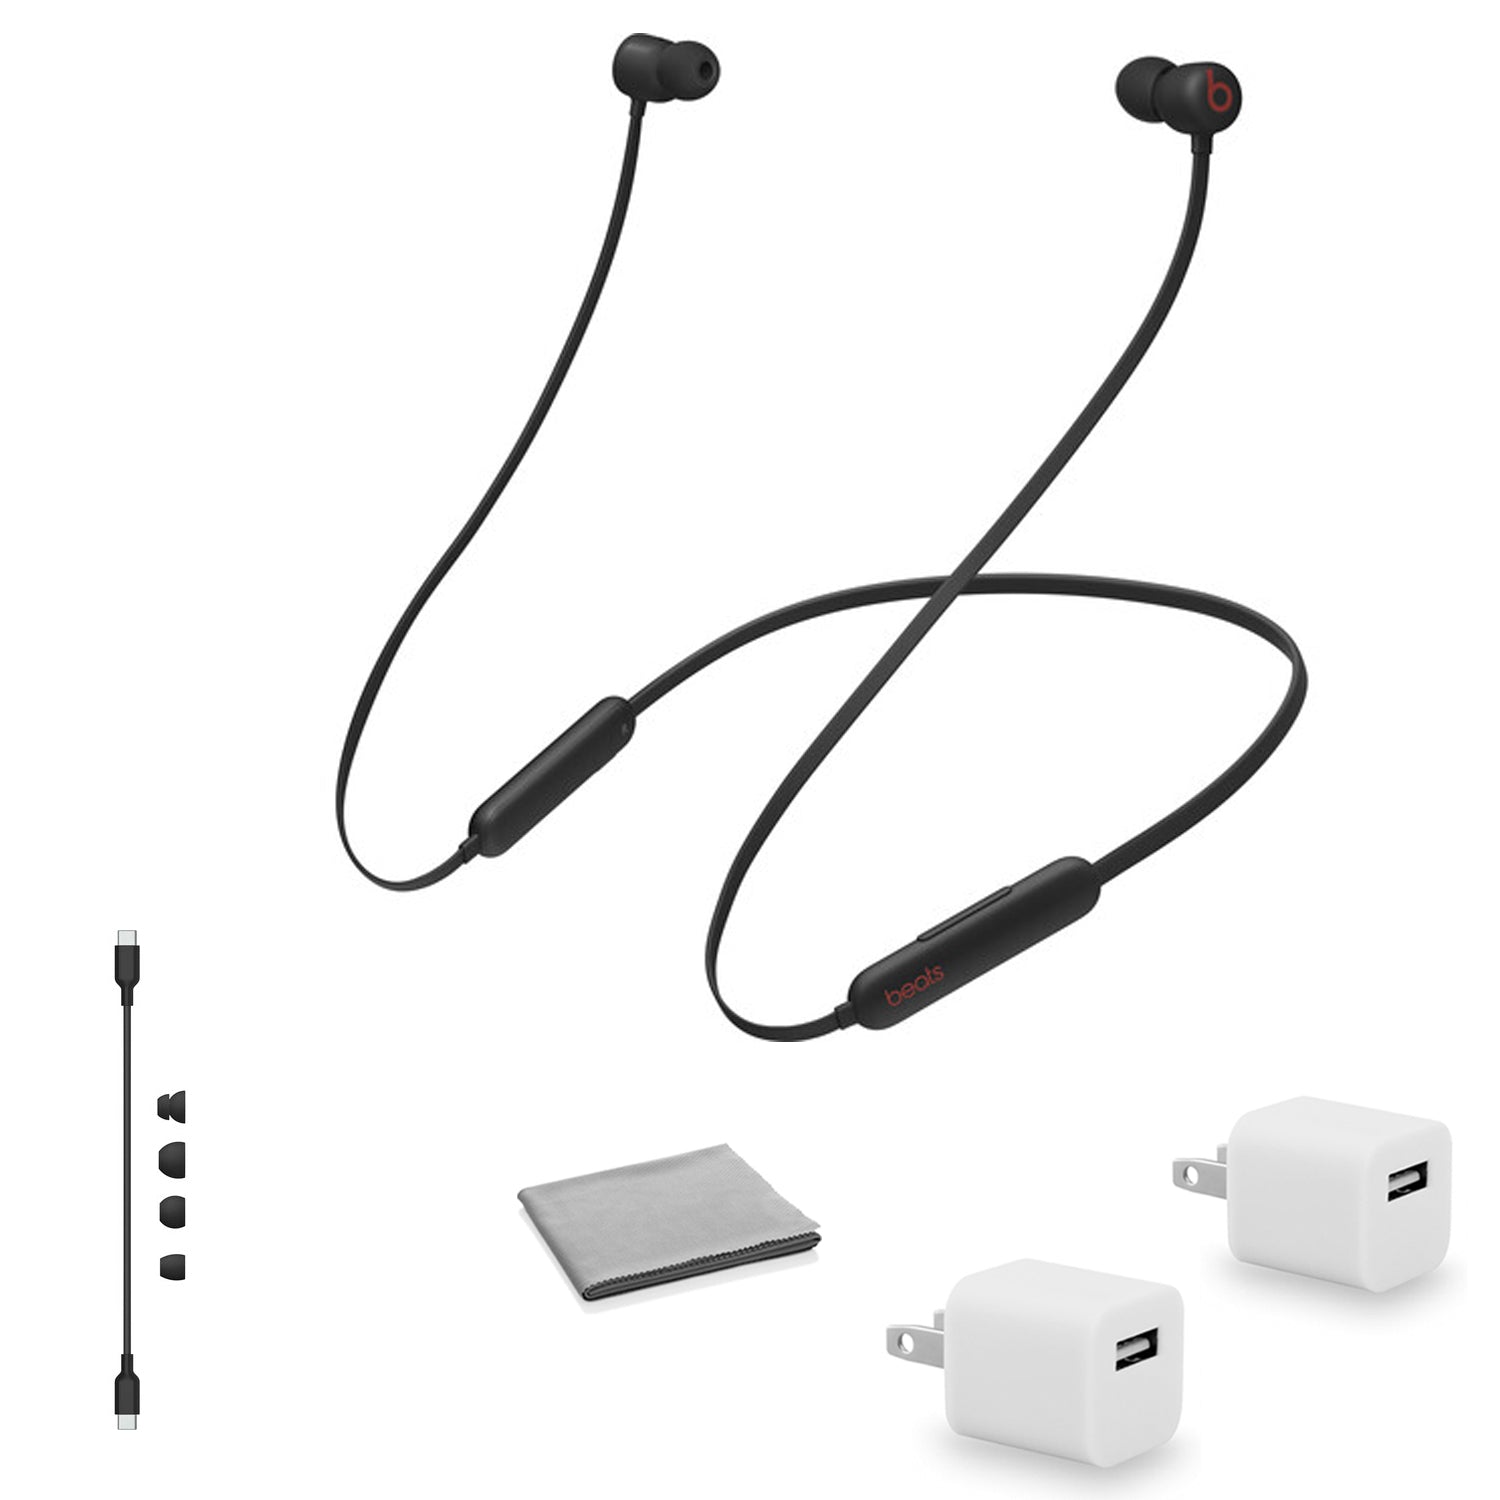 Beats by Dr. Dre Beats Flex Wireless In-Ear Headphones (Beats Black) MYMC2LL/A with USB Adapter Cube Bundle